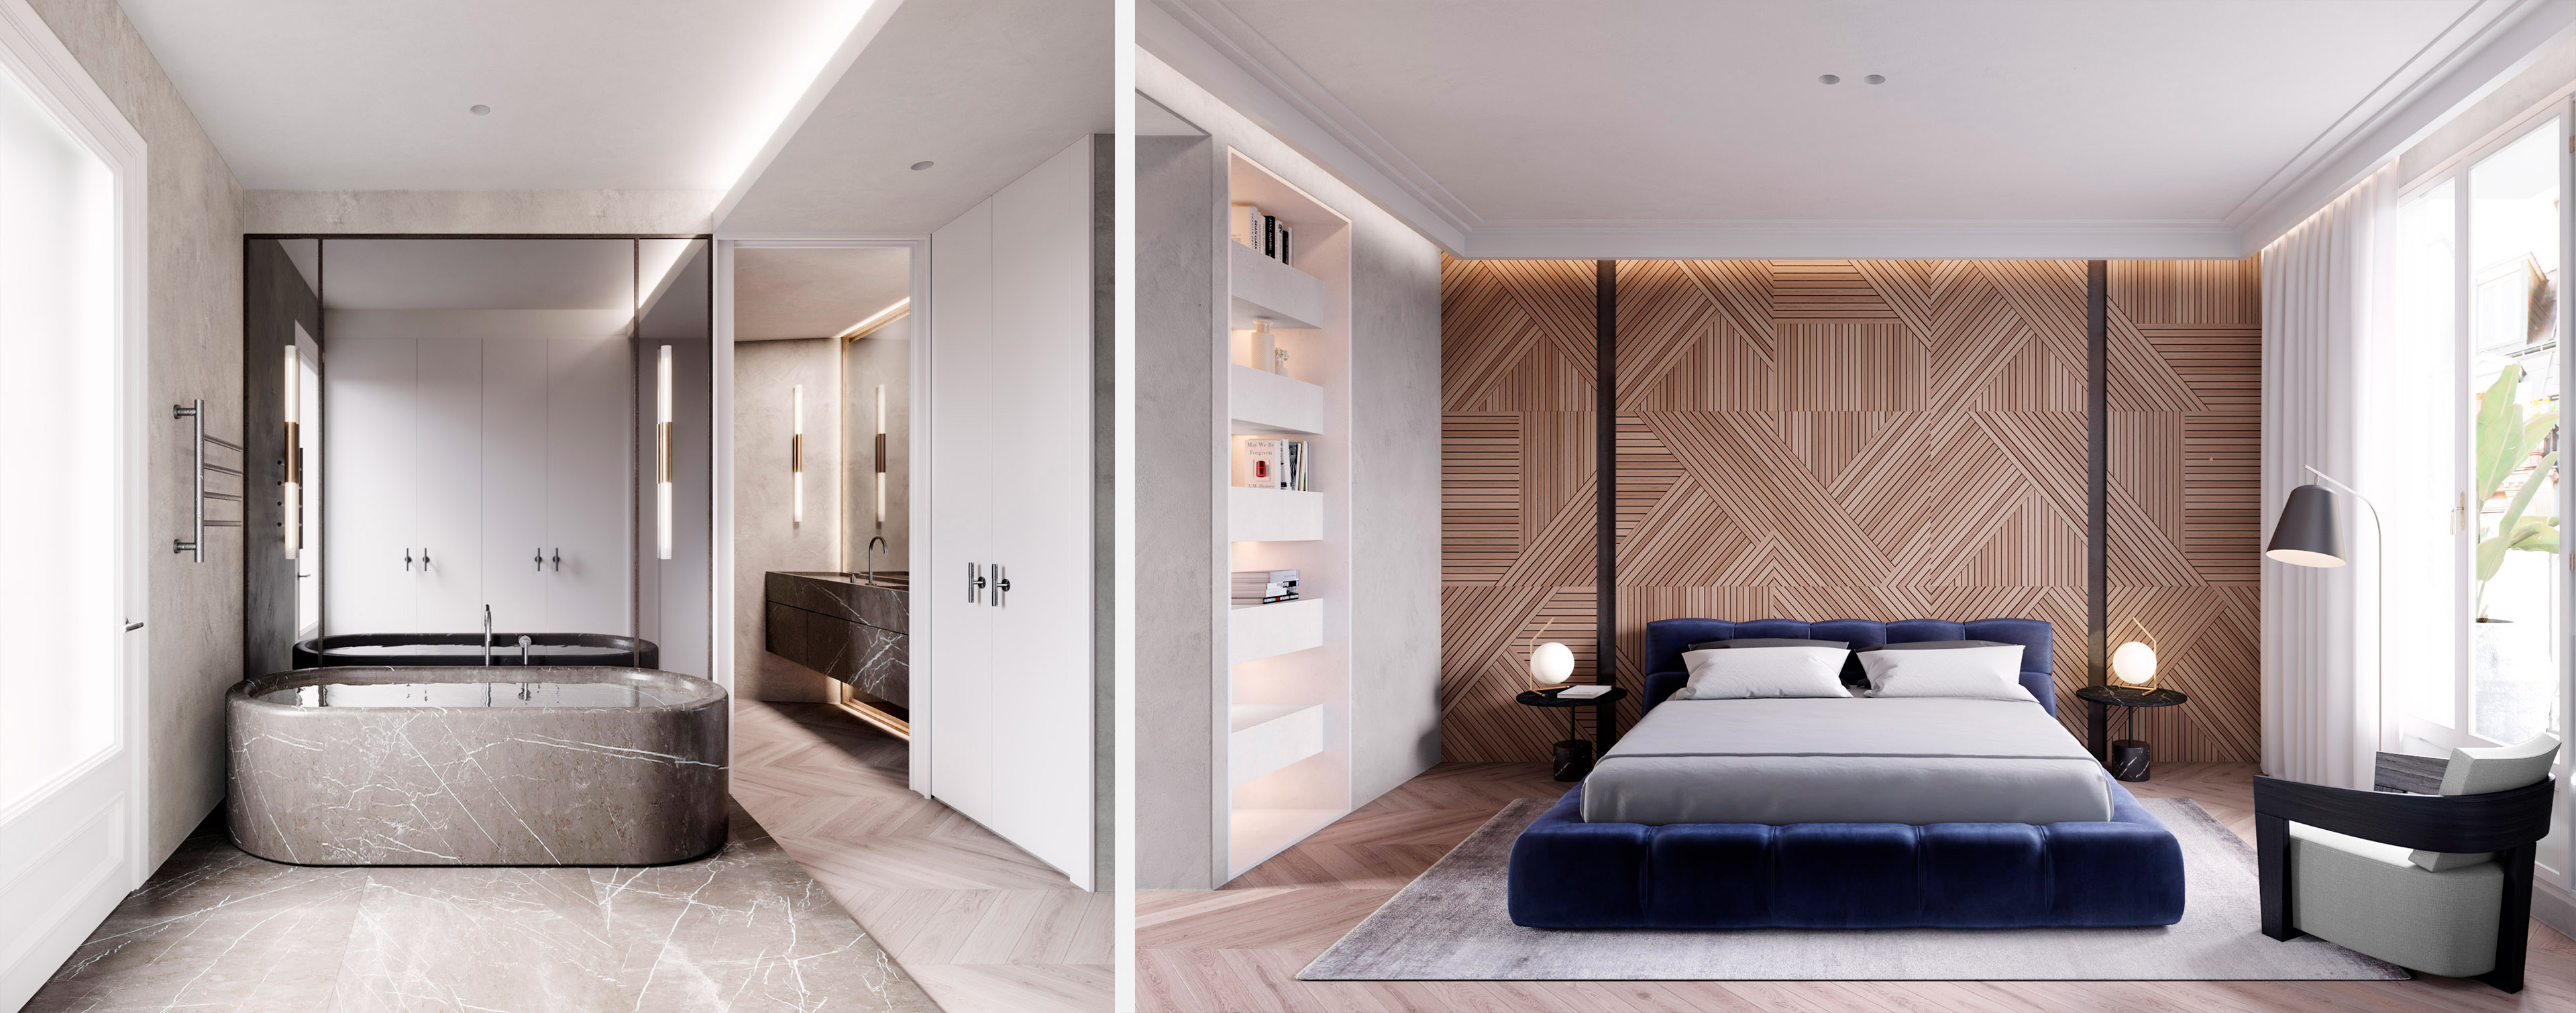 luv studio luxury architects paris rue oudinot apartment IMG 02 - Rue Oudinot Apartment